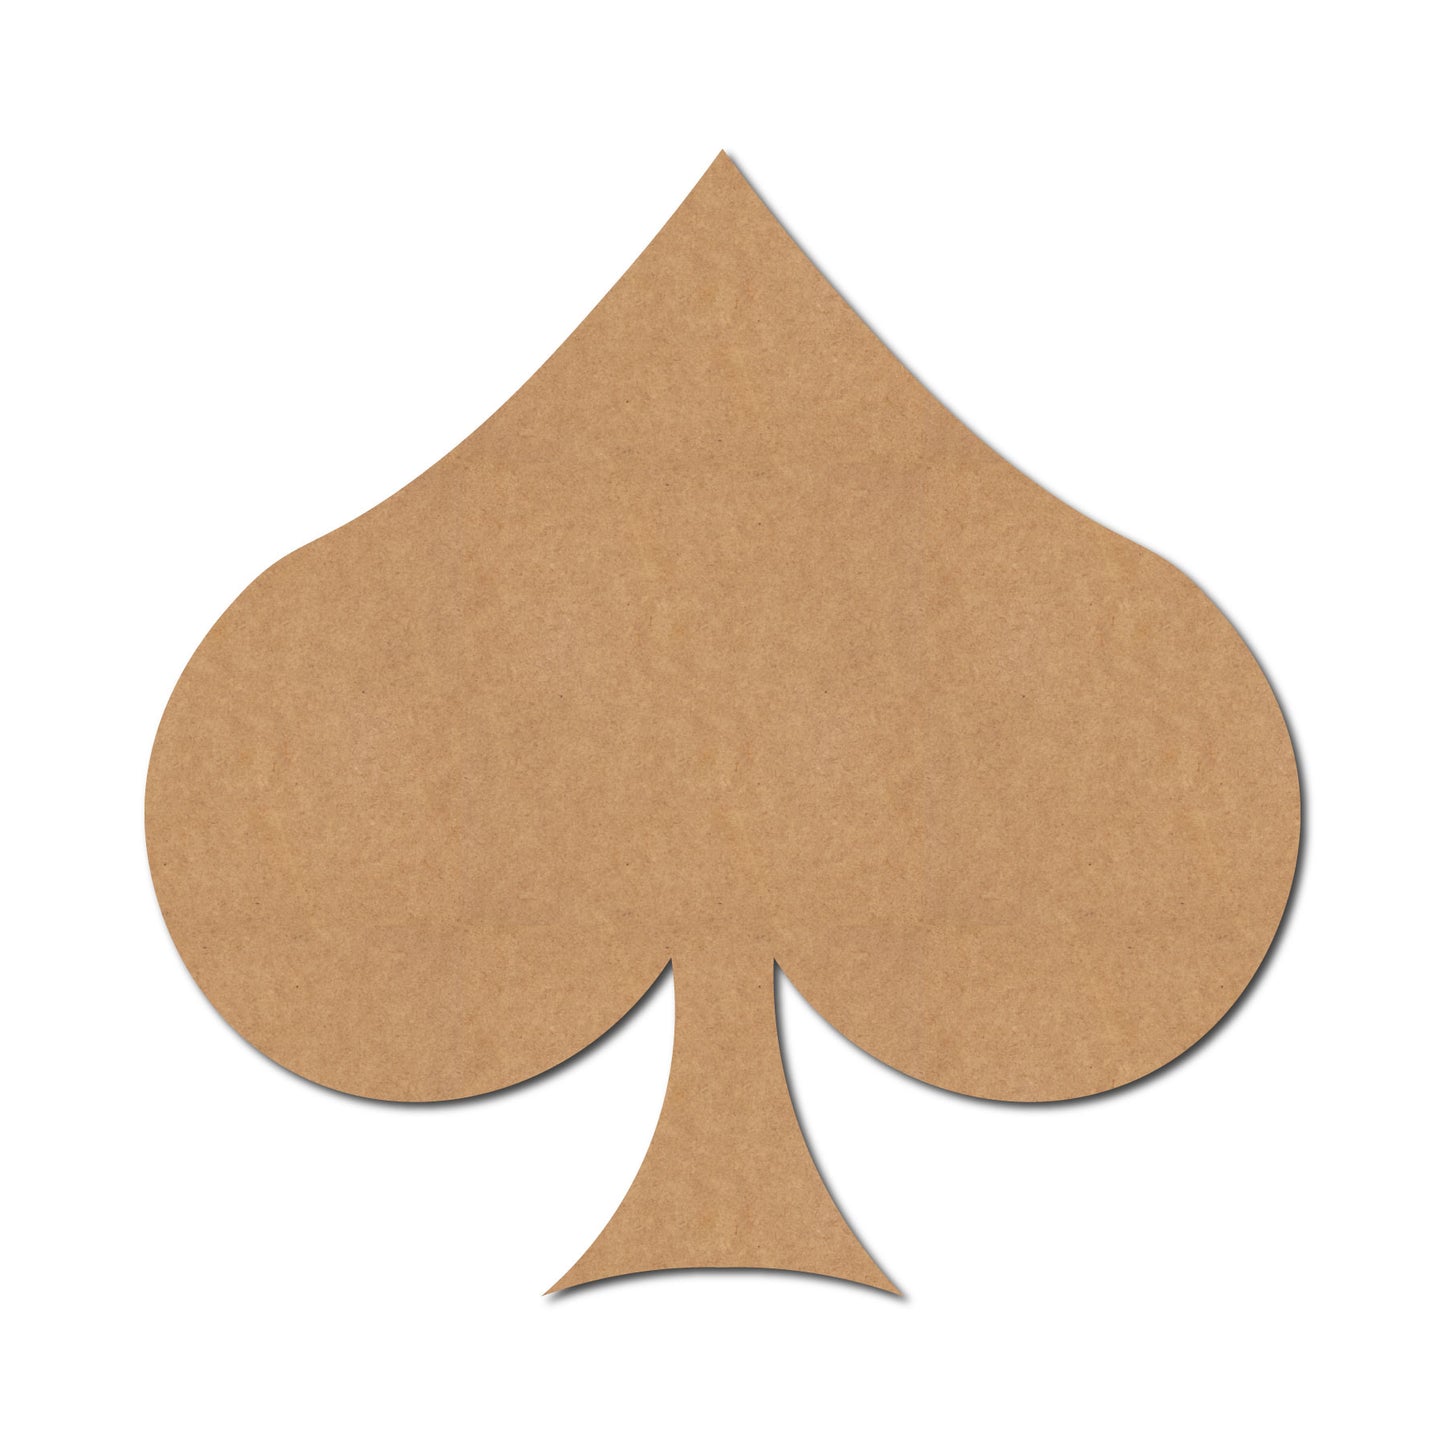 Spade Poker Cutout MDF Design 1